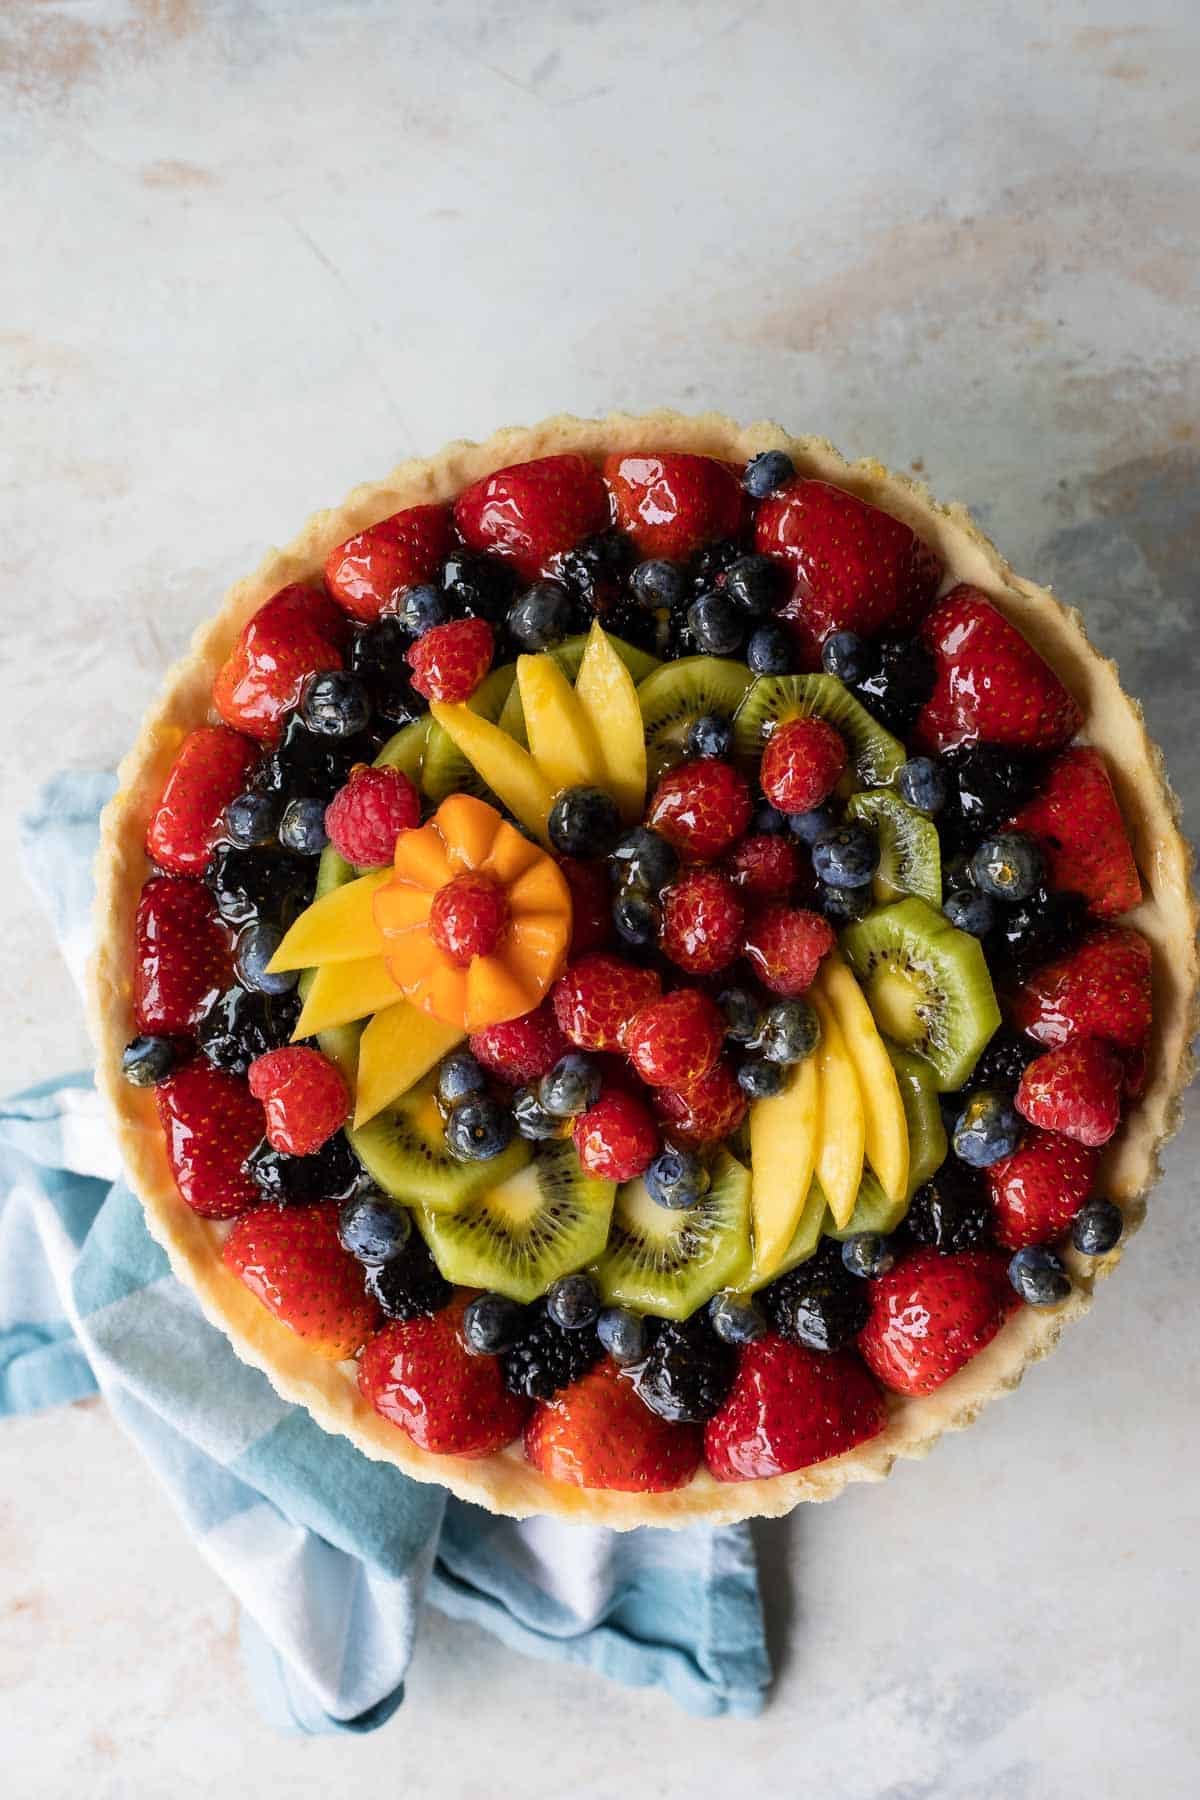 A whole, unsliced fresh fruit tart.